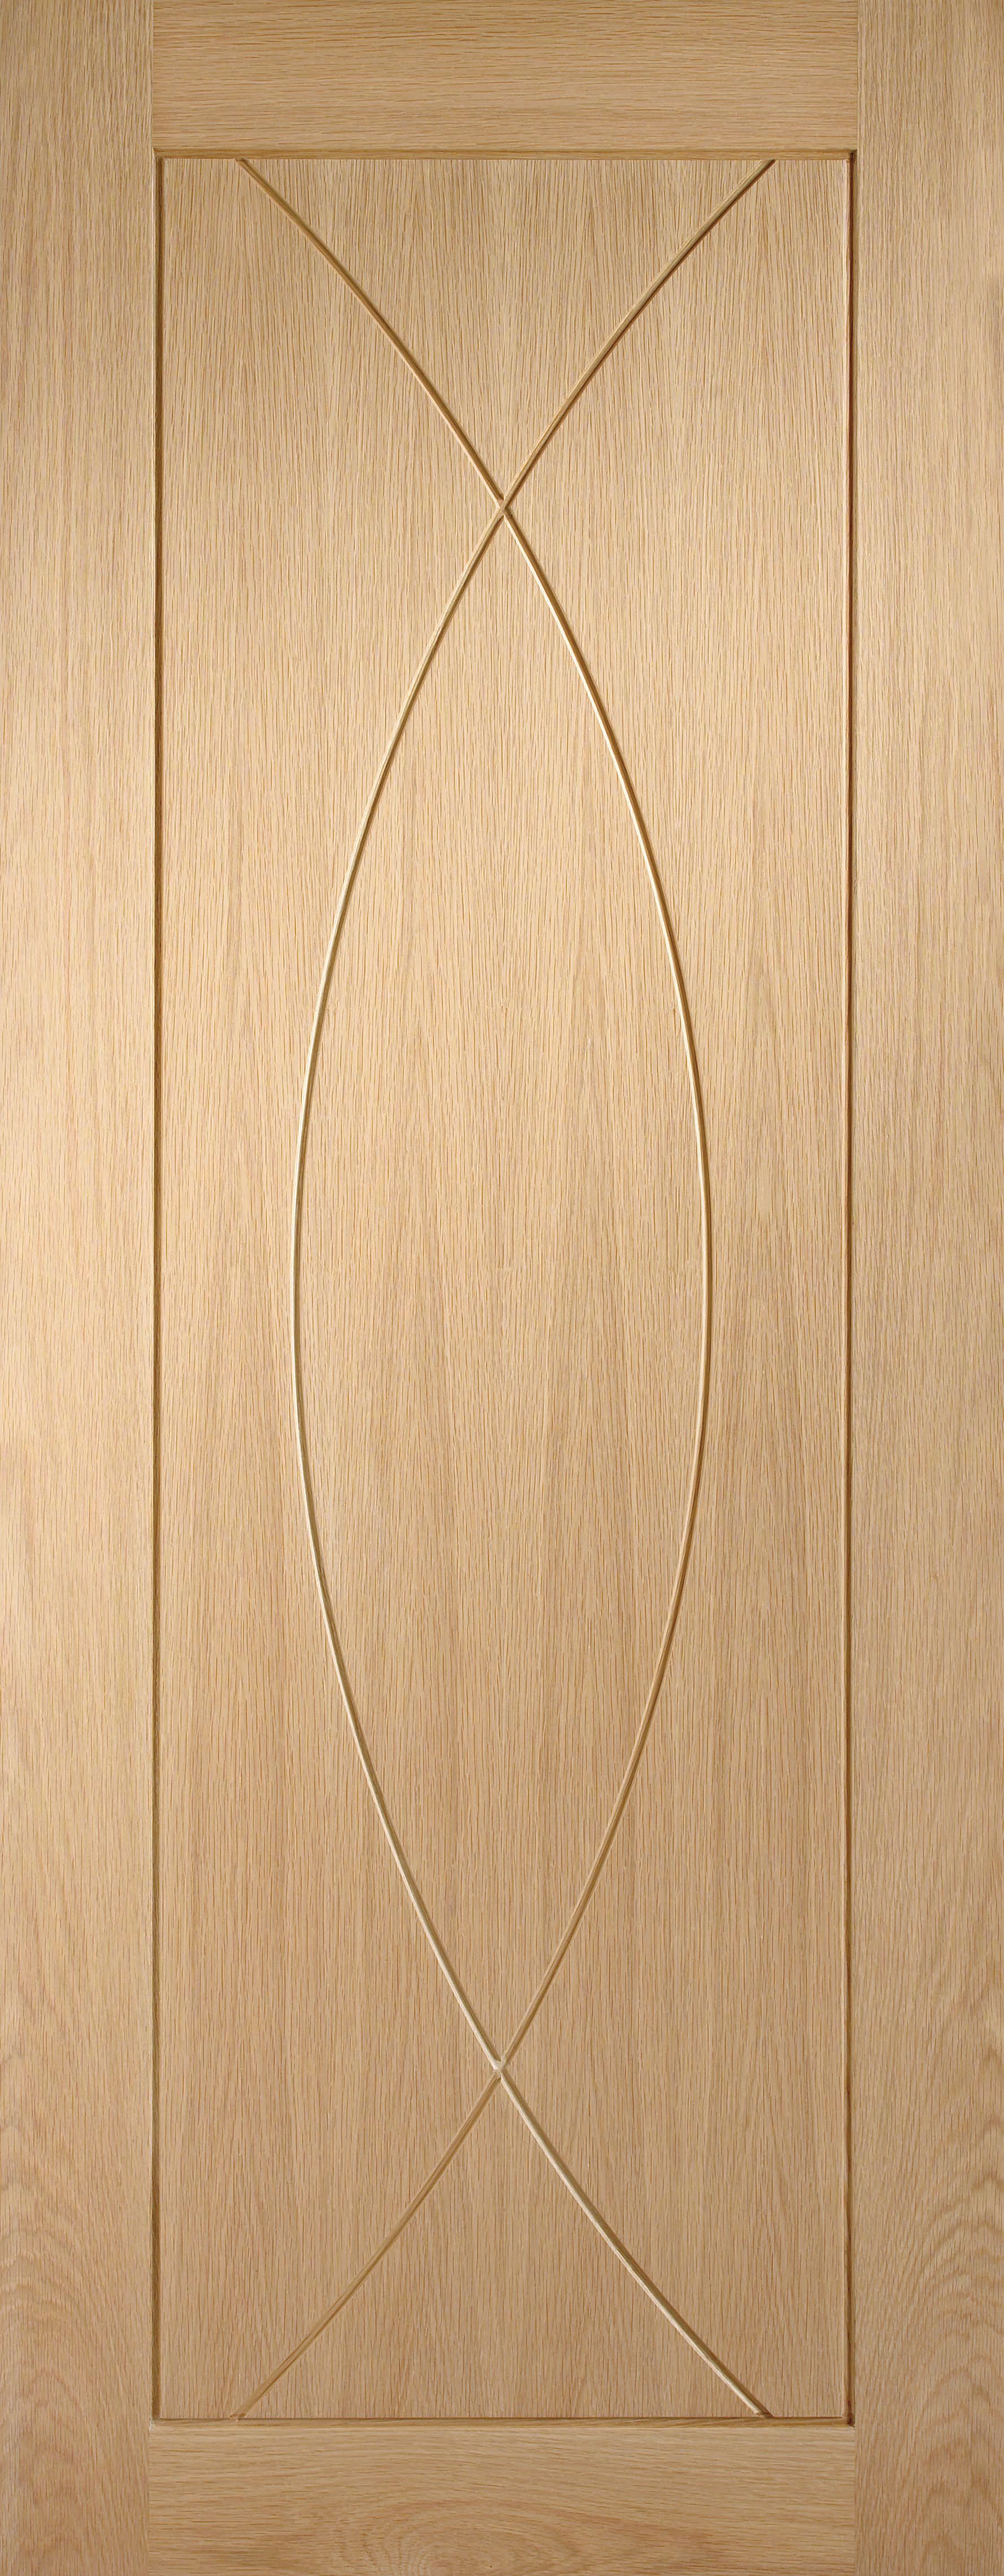 Image of XL Joinery Pesaro Oak Patterned Pre Finished Internal Door - 1981 x 686mm